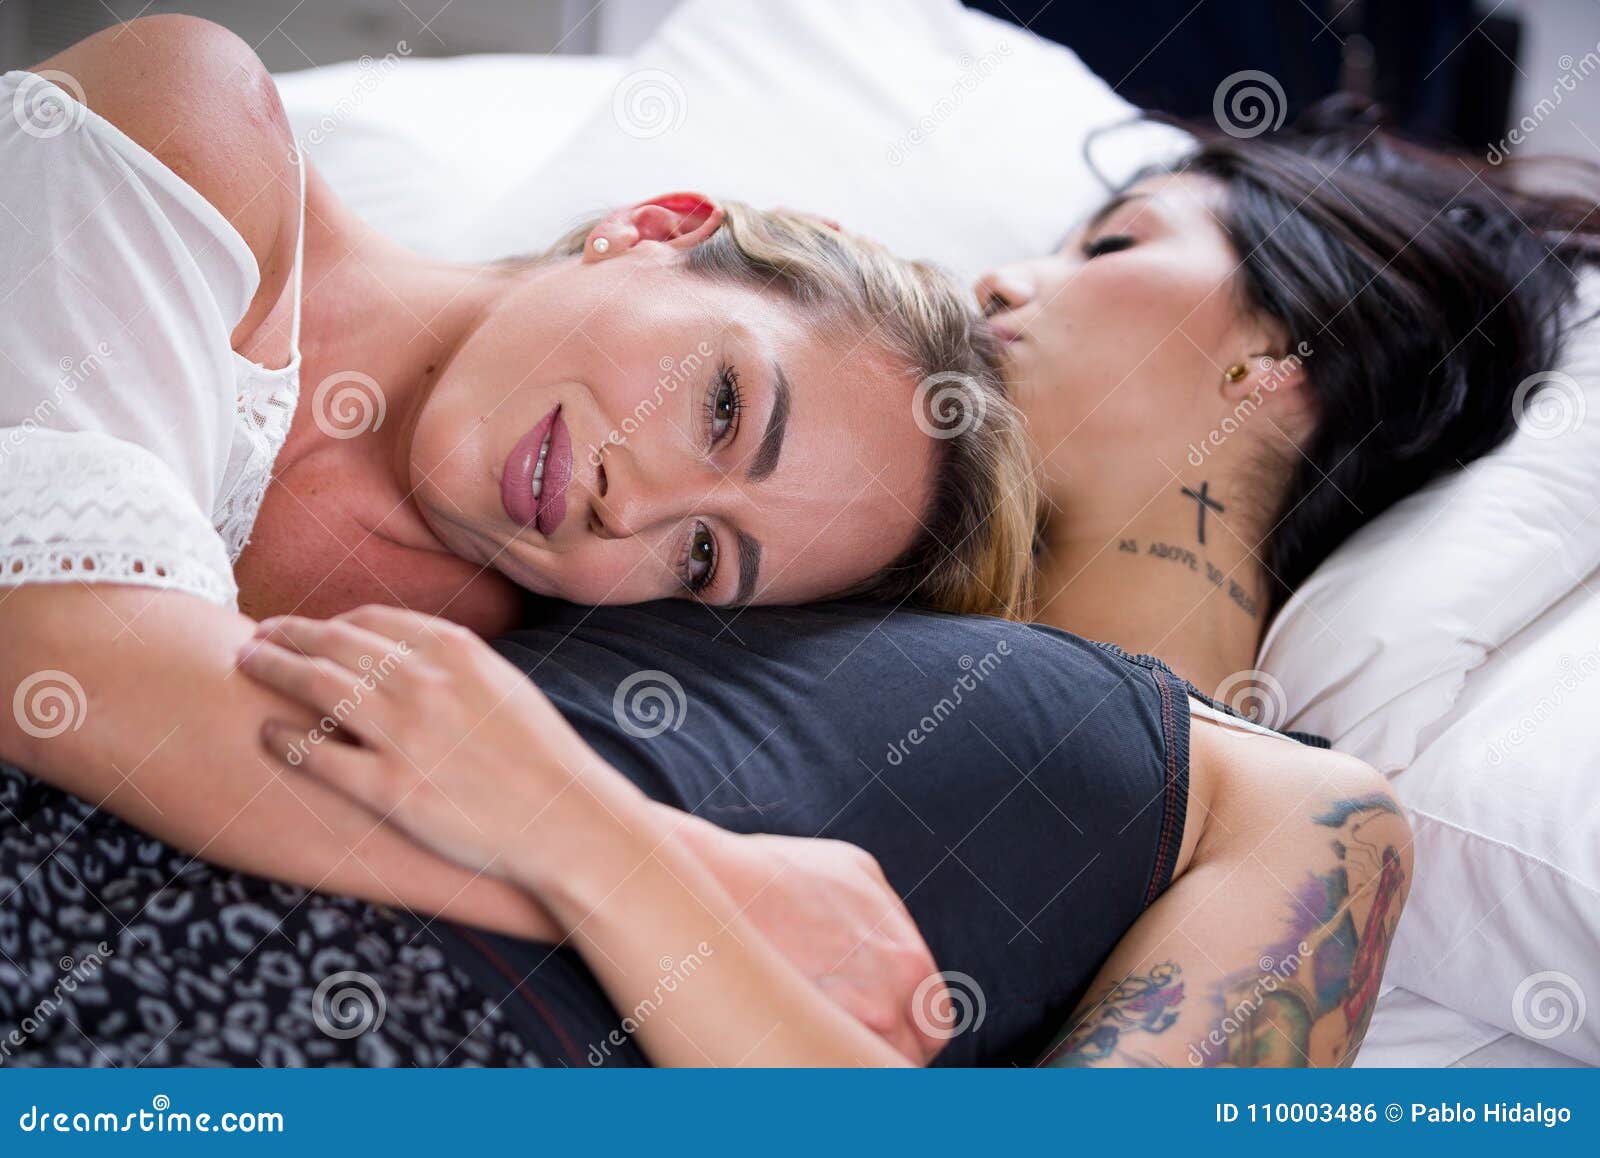 my girlfriend sleep lesbian Sex Images Hq